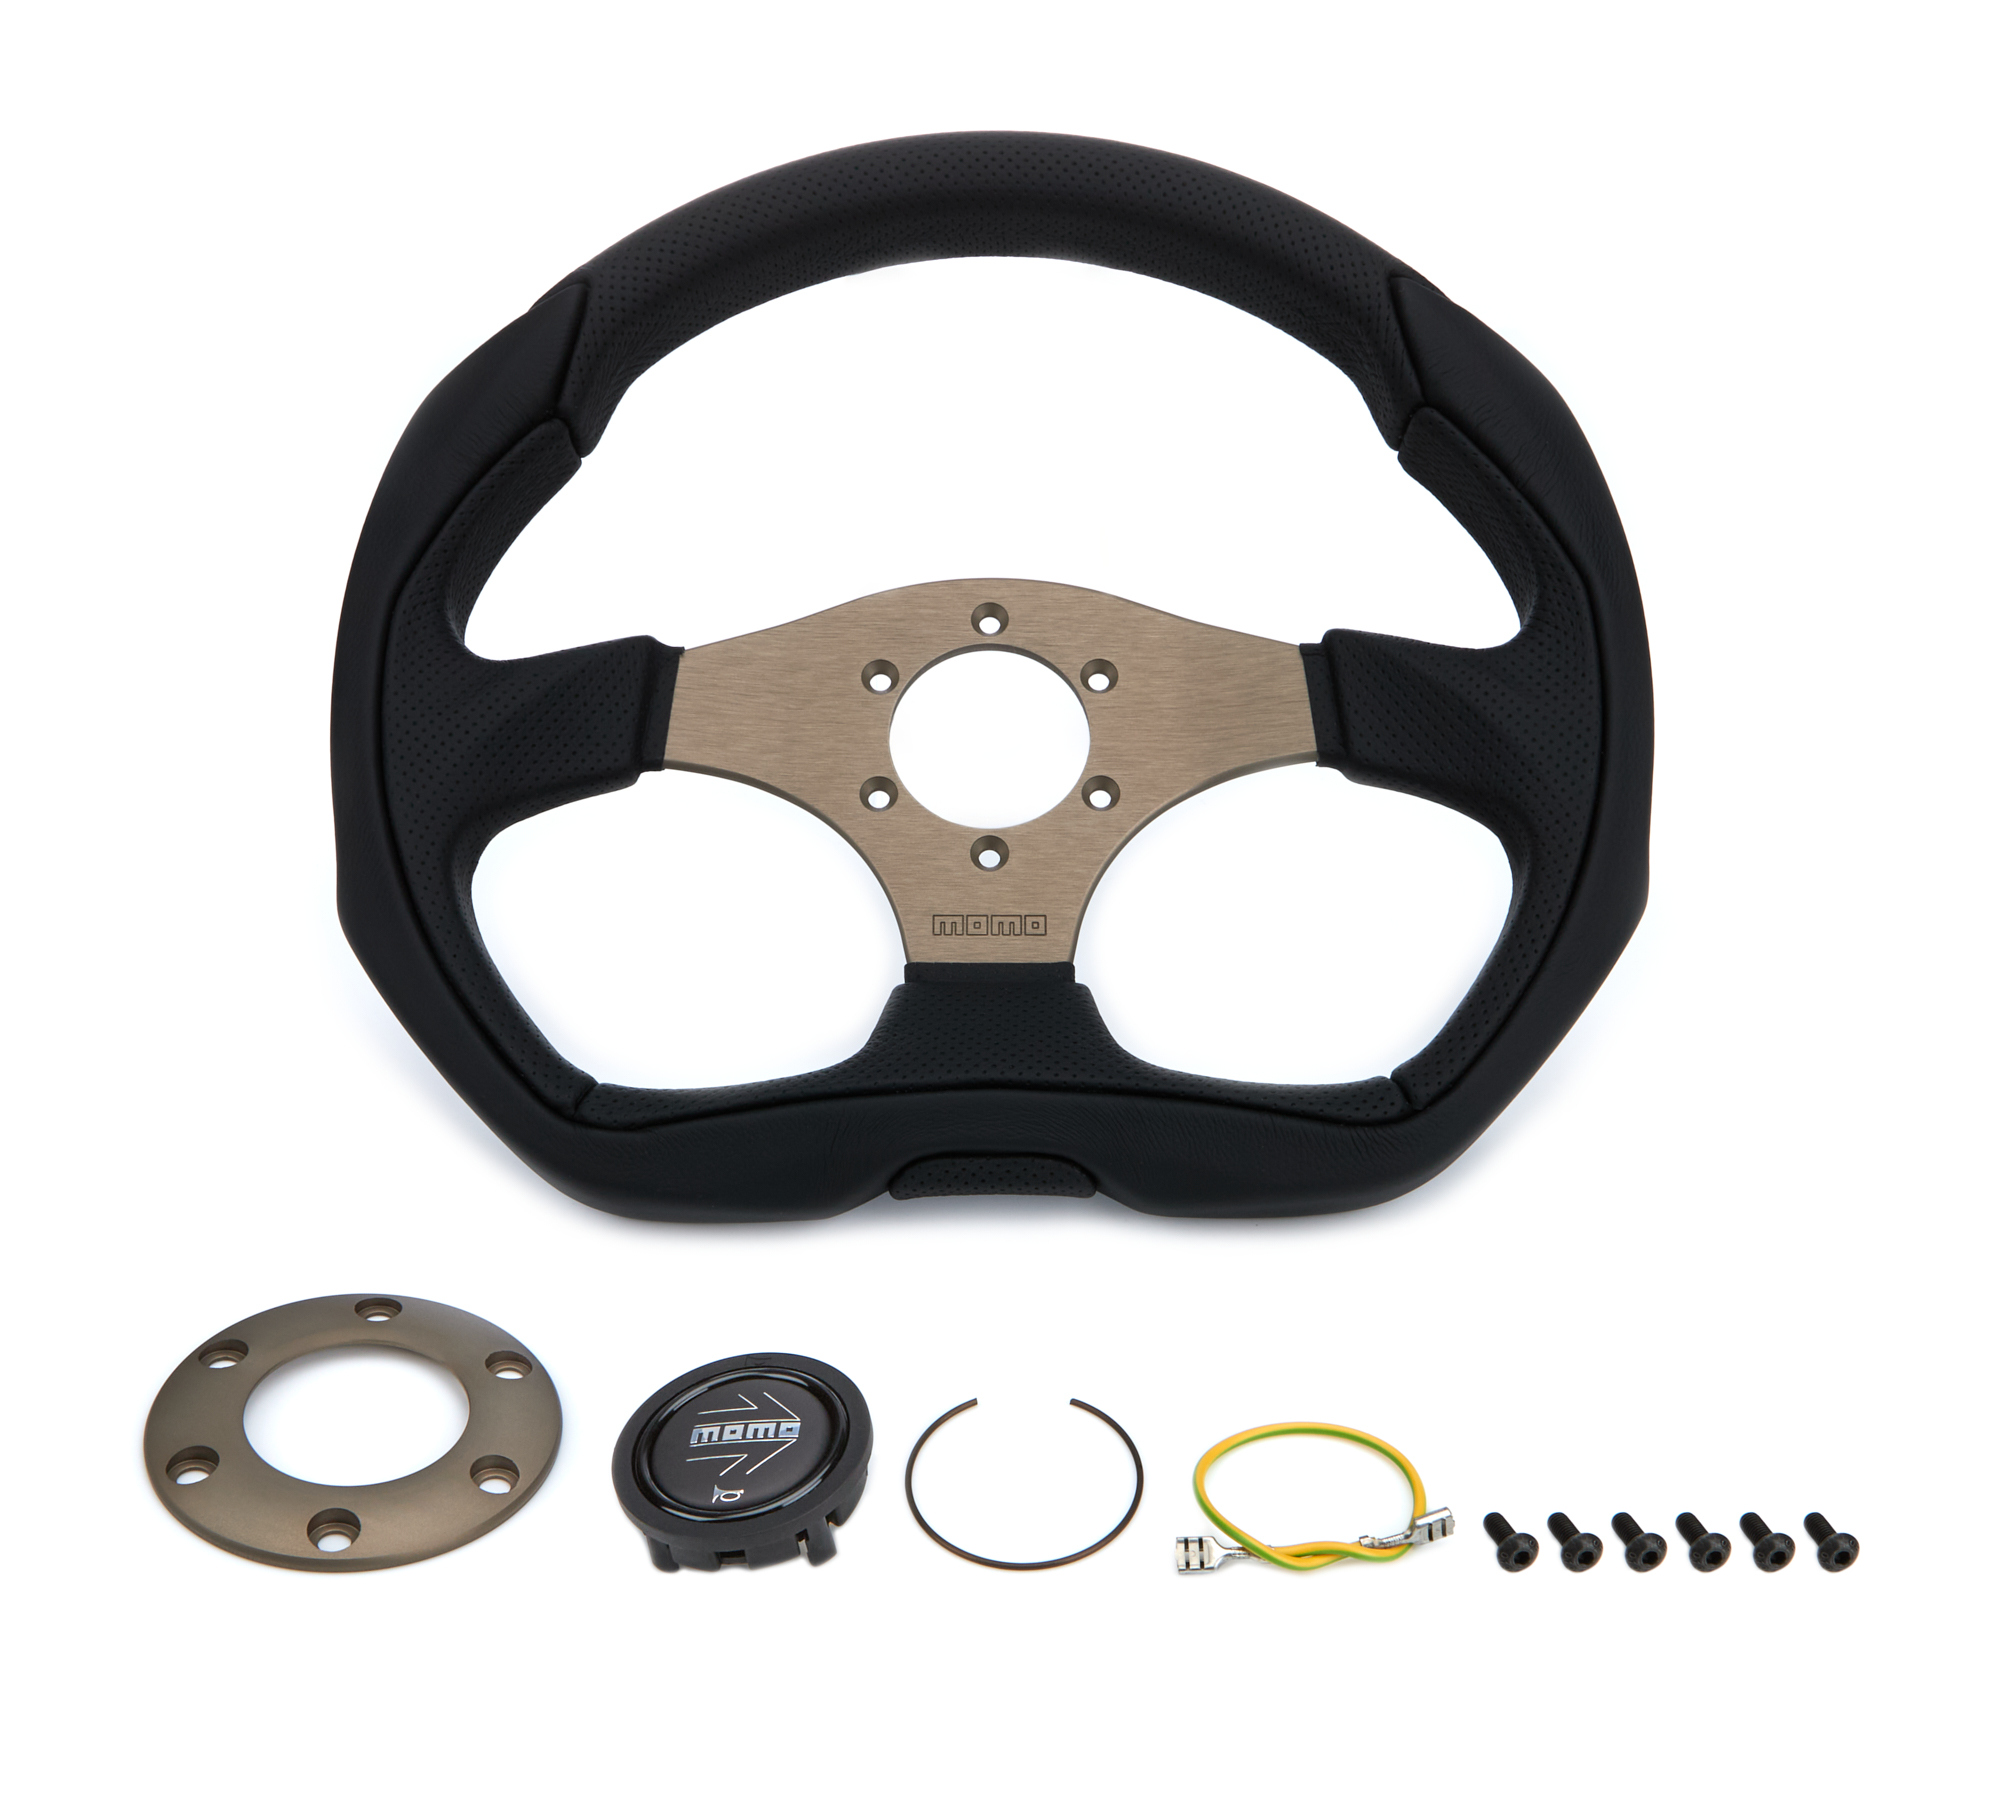 Momo EAG35BK0S Steering Wheel, Eagle, 350 mm Diameter, 40 mm Dish, 3-Spoke, Black Leather Grip, Aluminum, Gray Anodized, Each